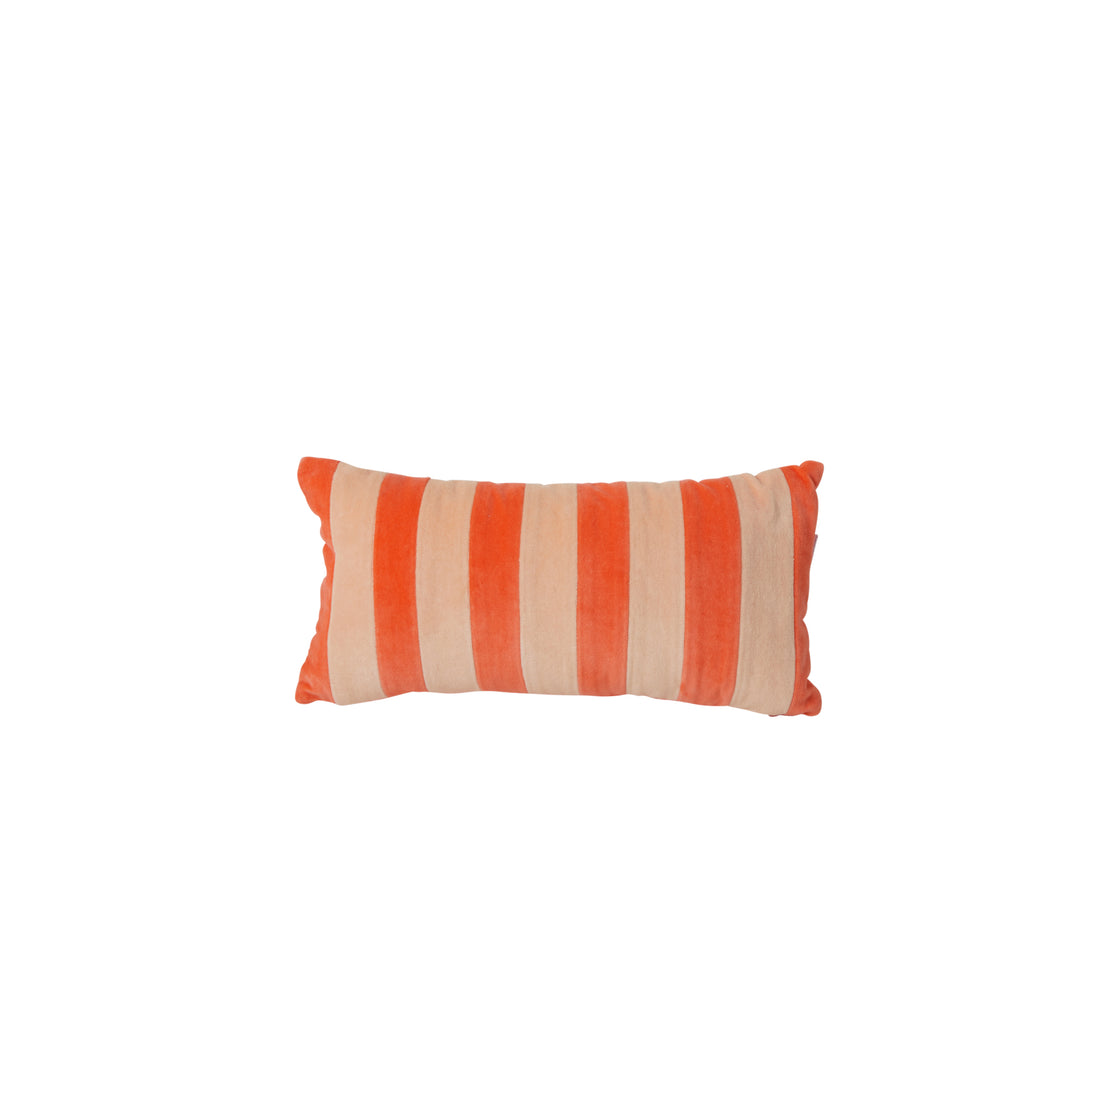 rice-dk-velvet-rectangular-pillow-with-orange-and-apricot-stripes-small-rice-csrec-sstroap-